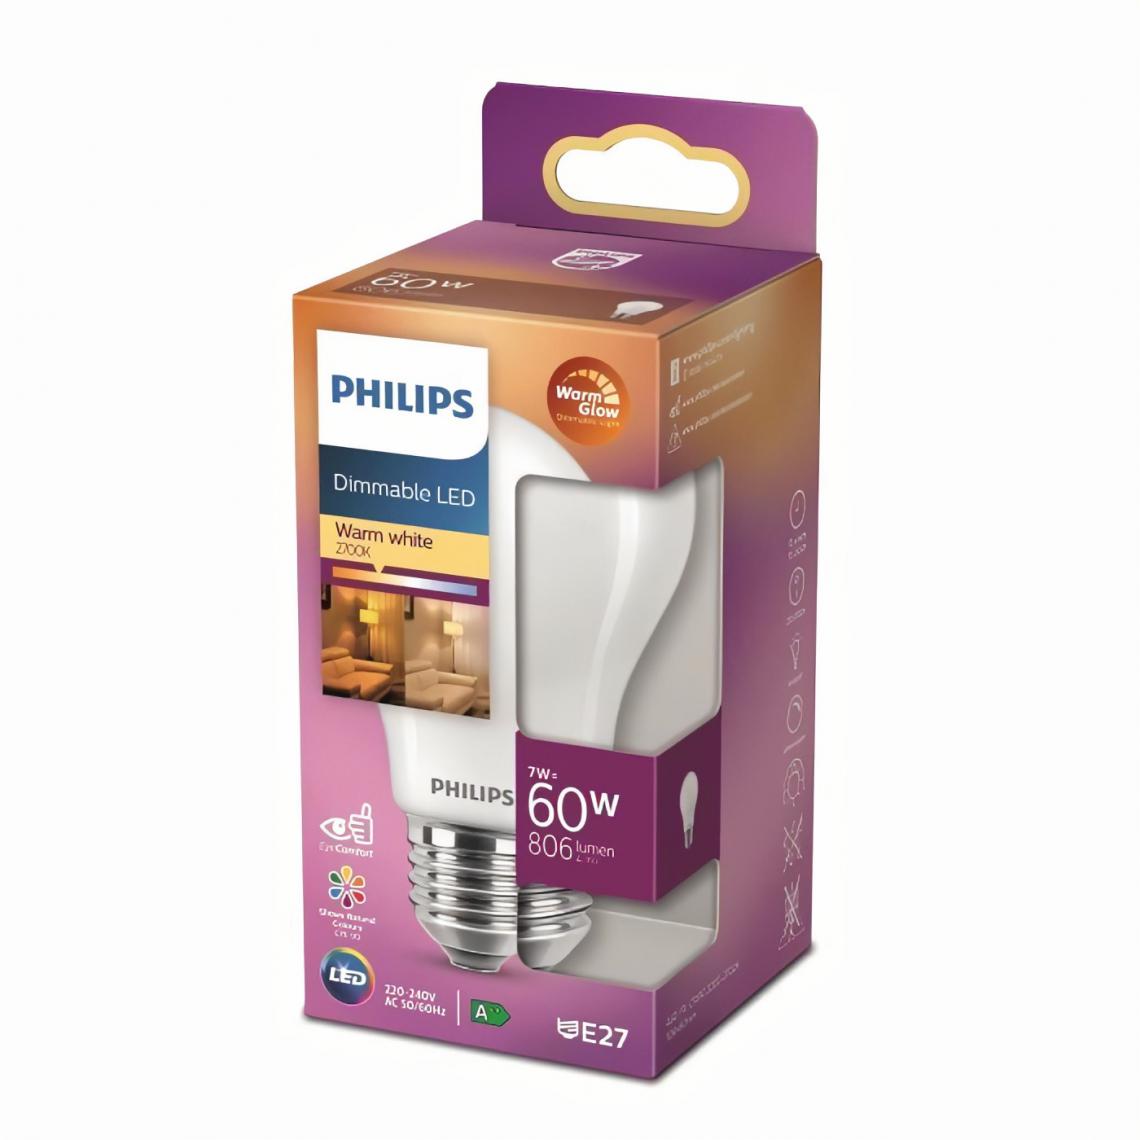 Philips - Philips ampoule LED Equivalent 60W E27, Blanc chaud, Dimmable, verre - Ampoules LED